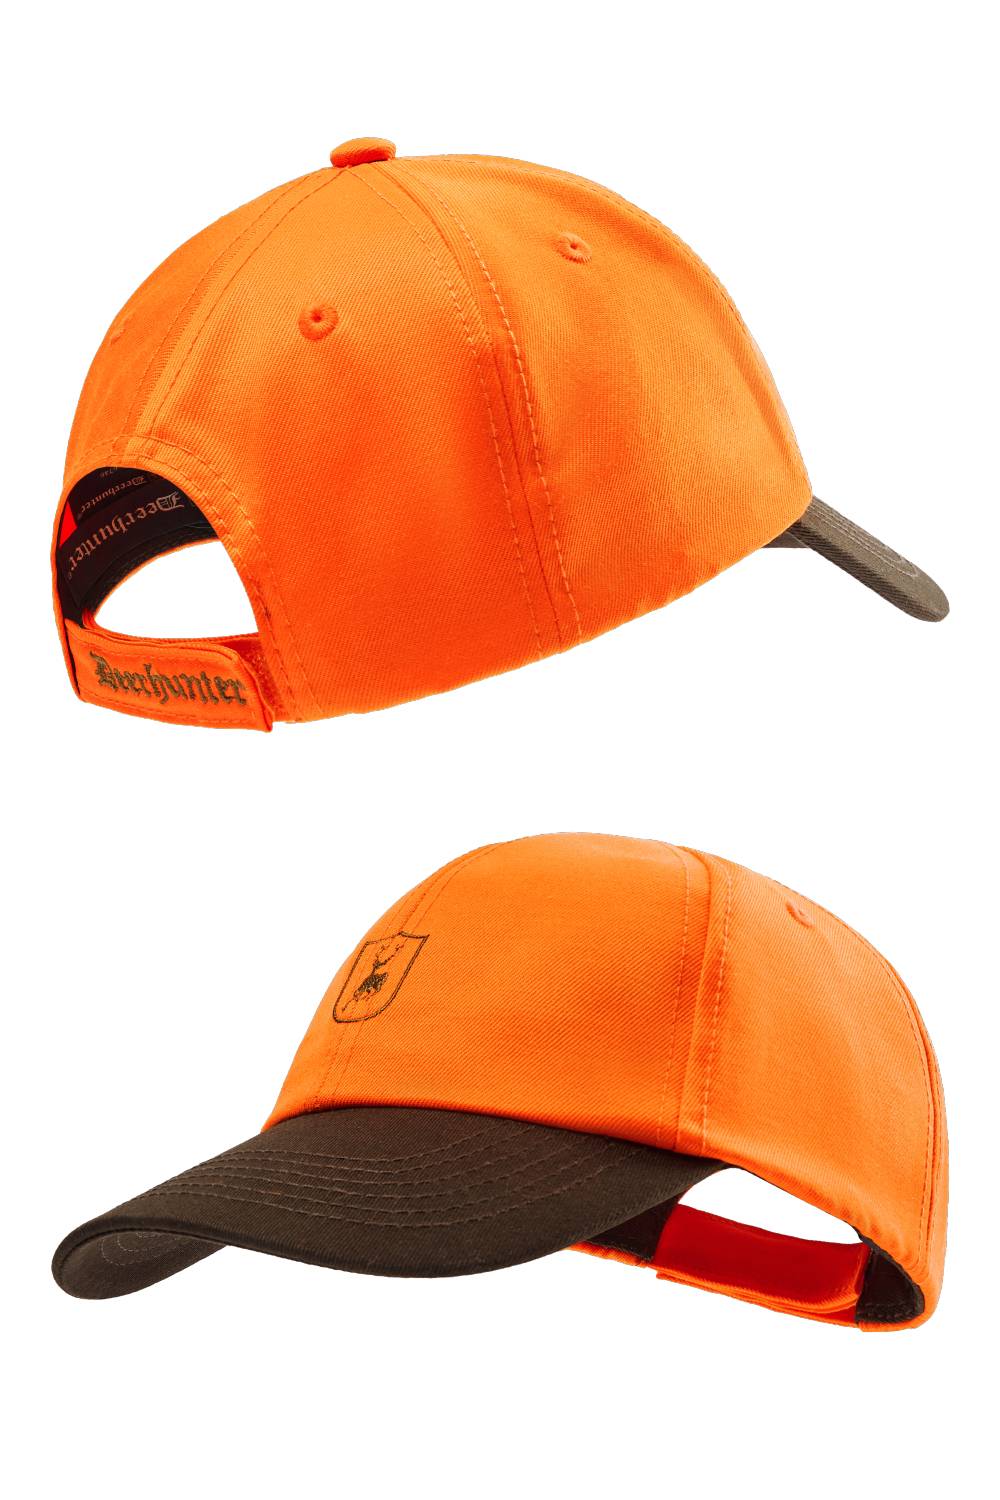 Deerhunter Youth Shield Cap in Orange 